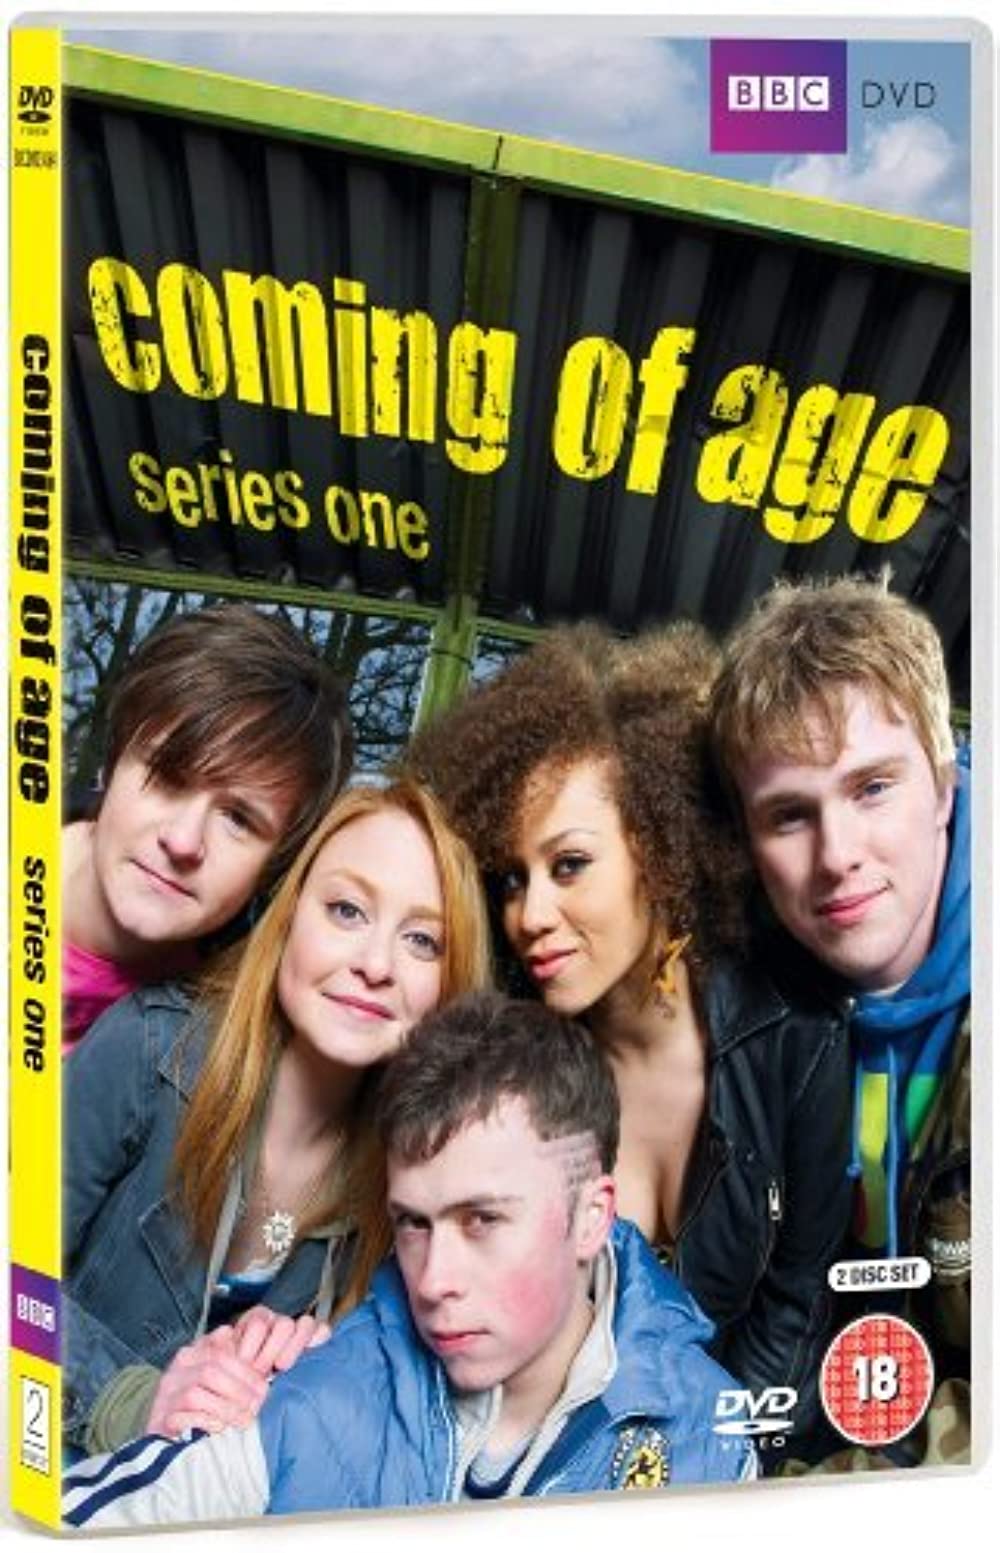 Filmbeschreibung zu Coming of Age (OV)